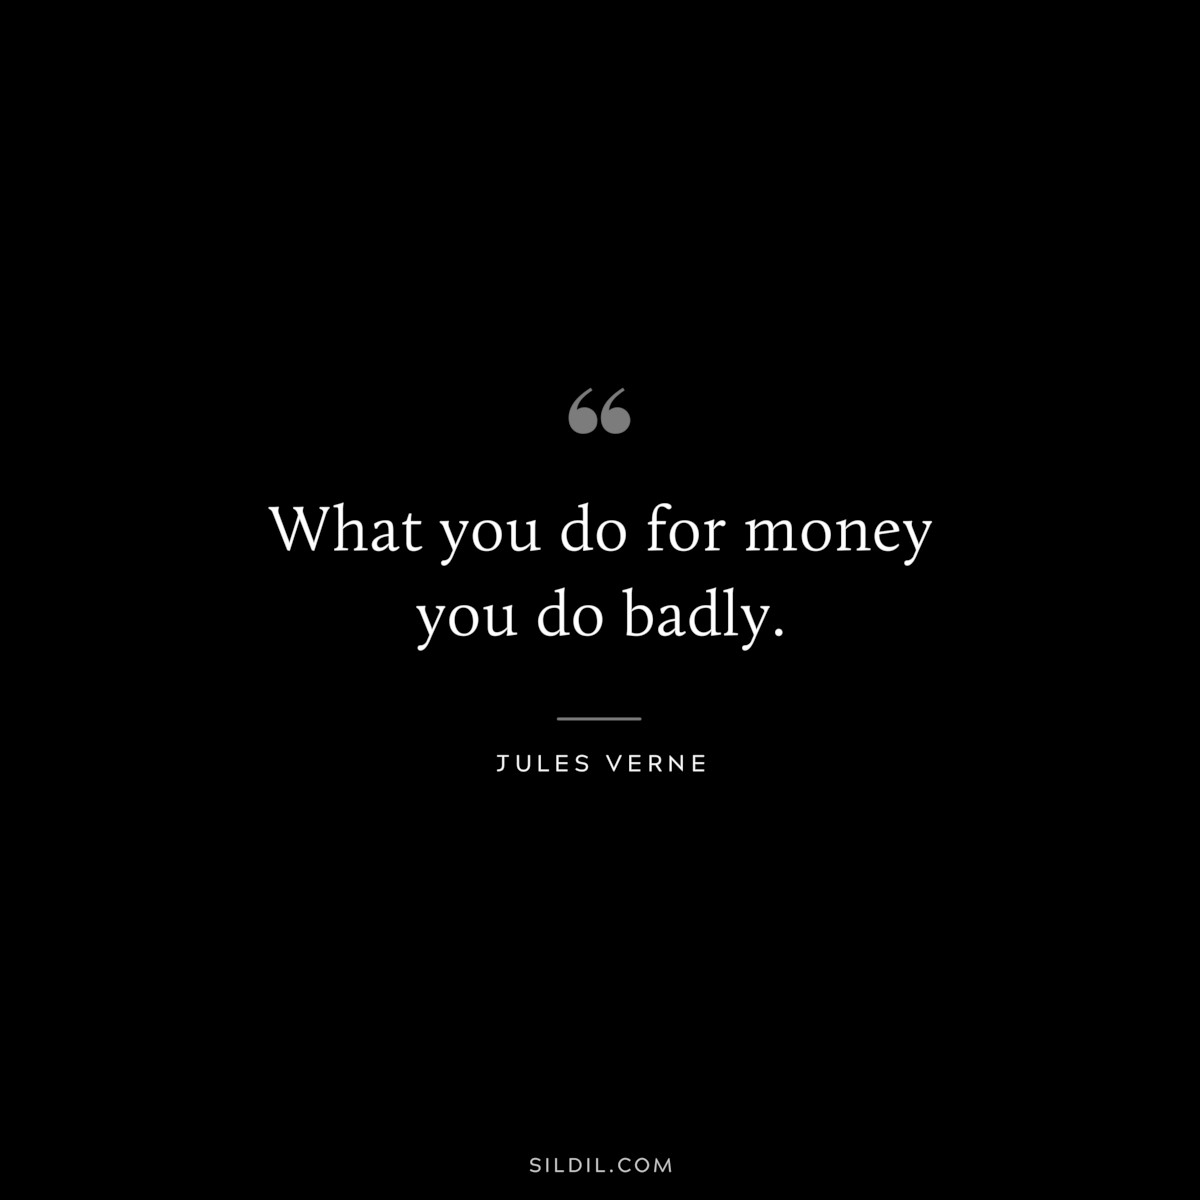 What you do for money you do badly.